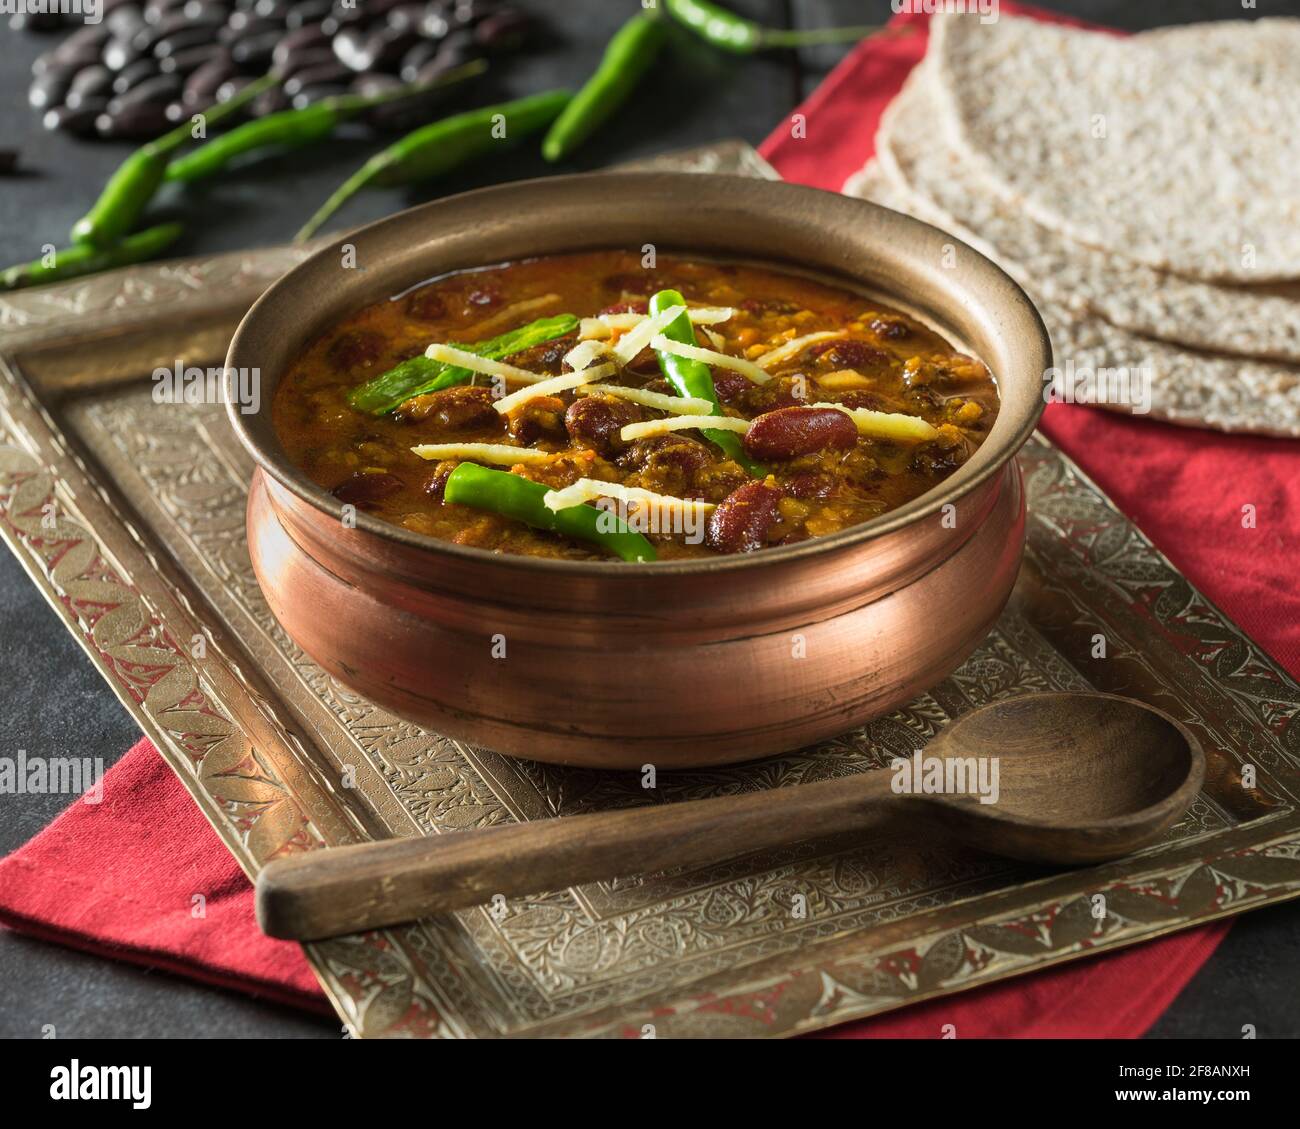 Rajma masala. Red kidney bean curry. India Food Stock Photo